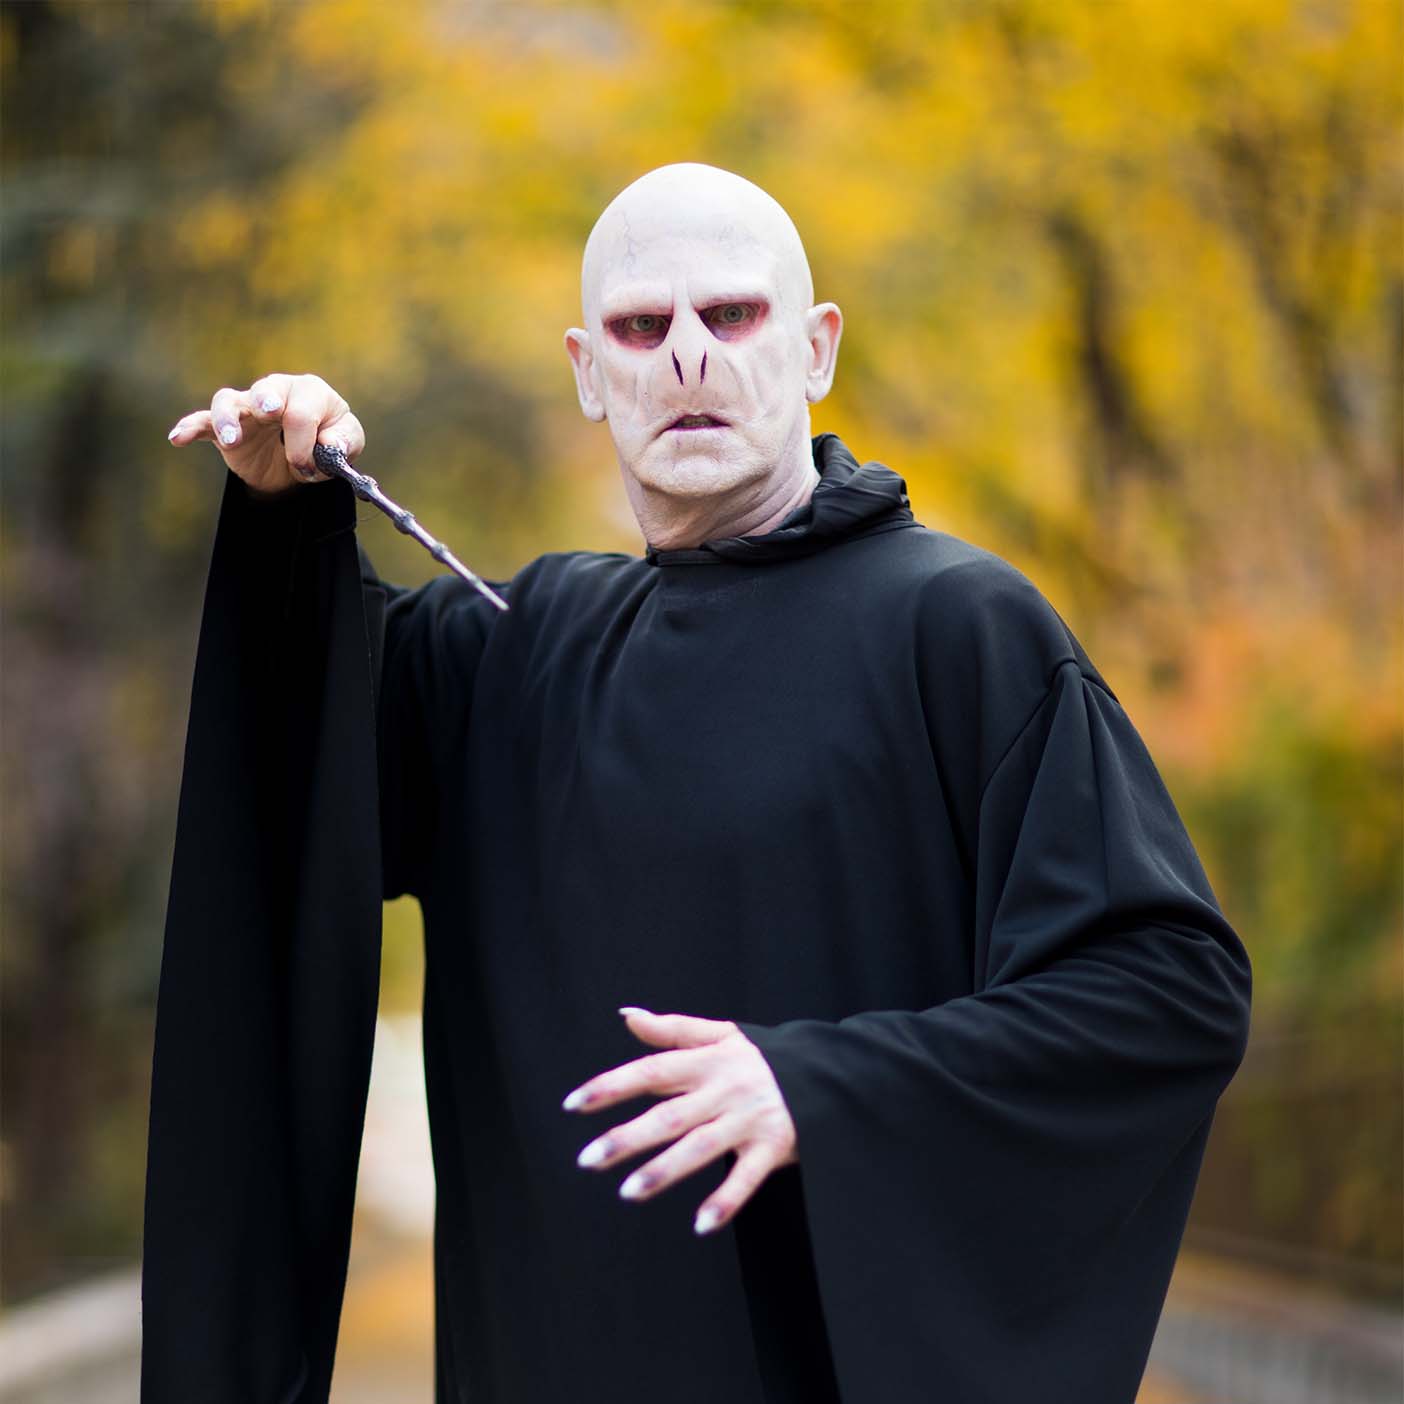 Tom Holmoe dressed up as Voldemort for Halloween.